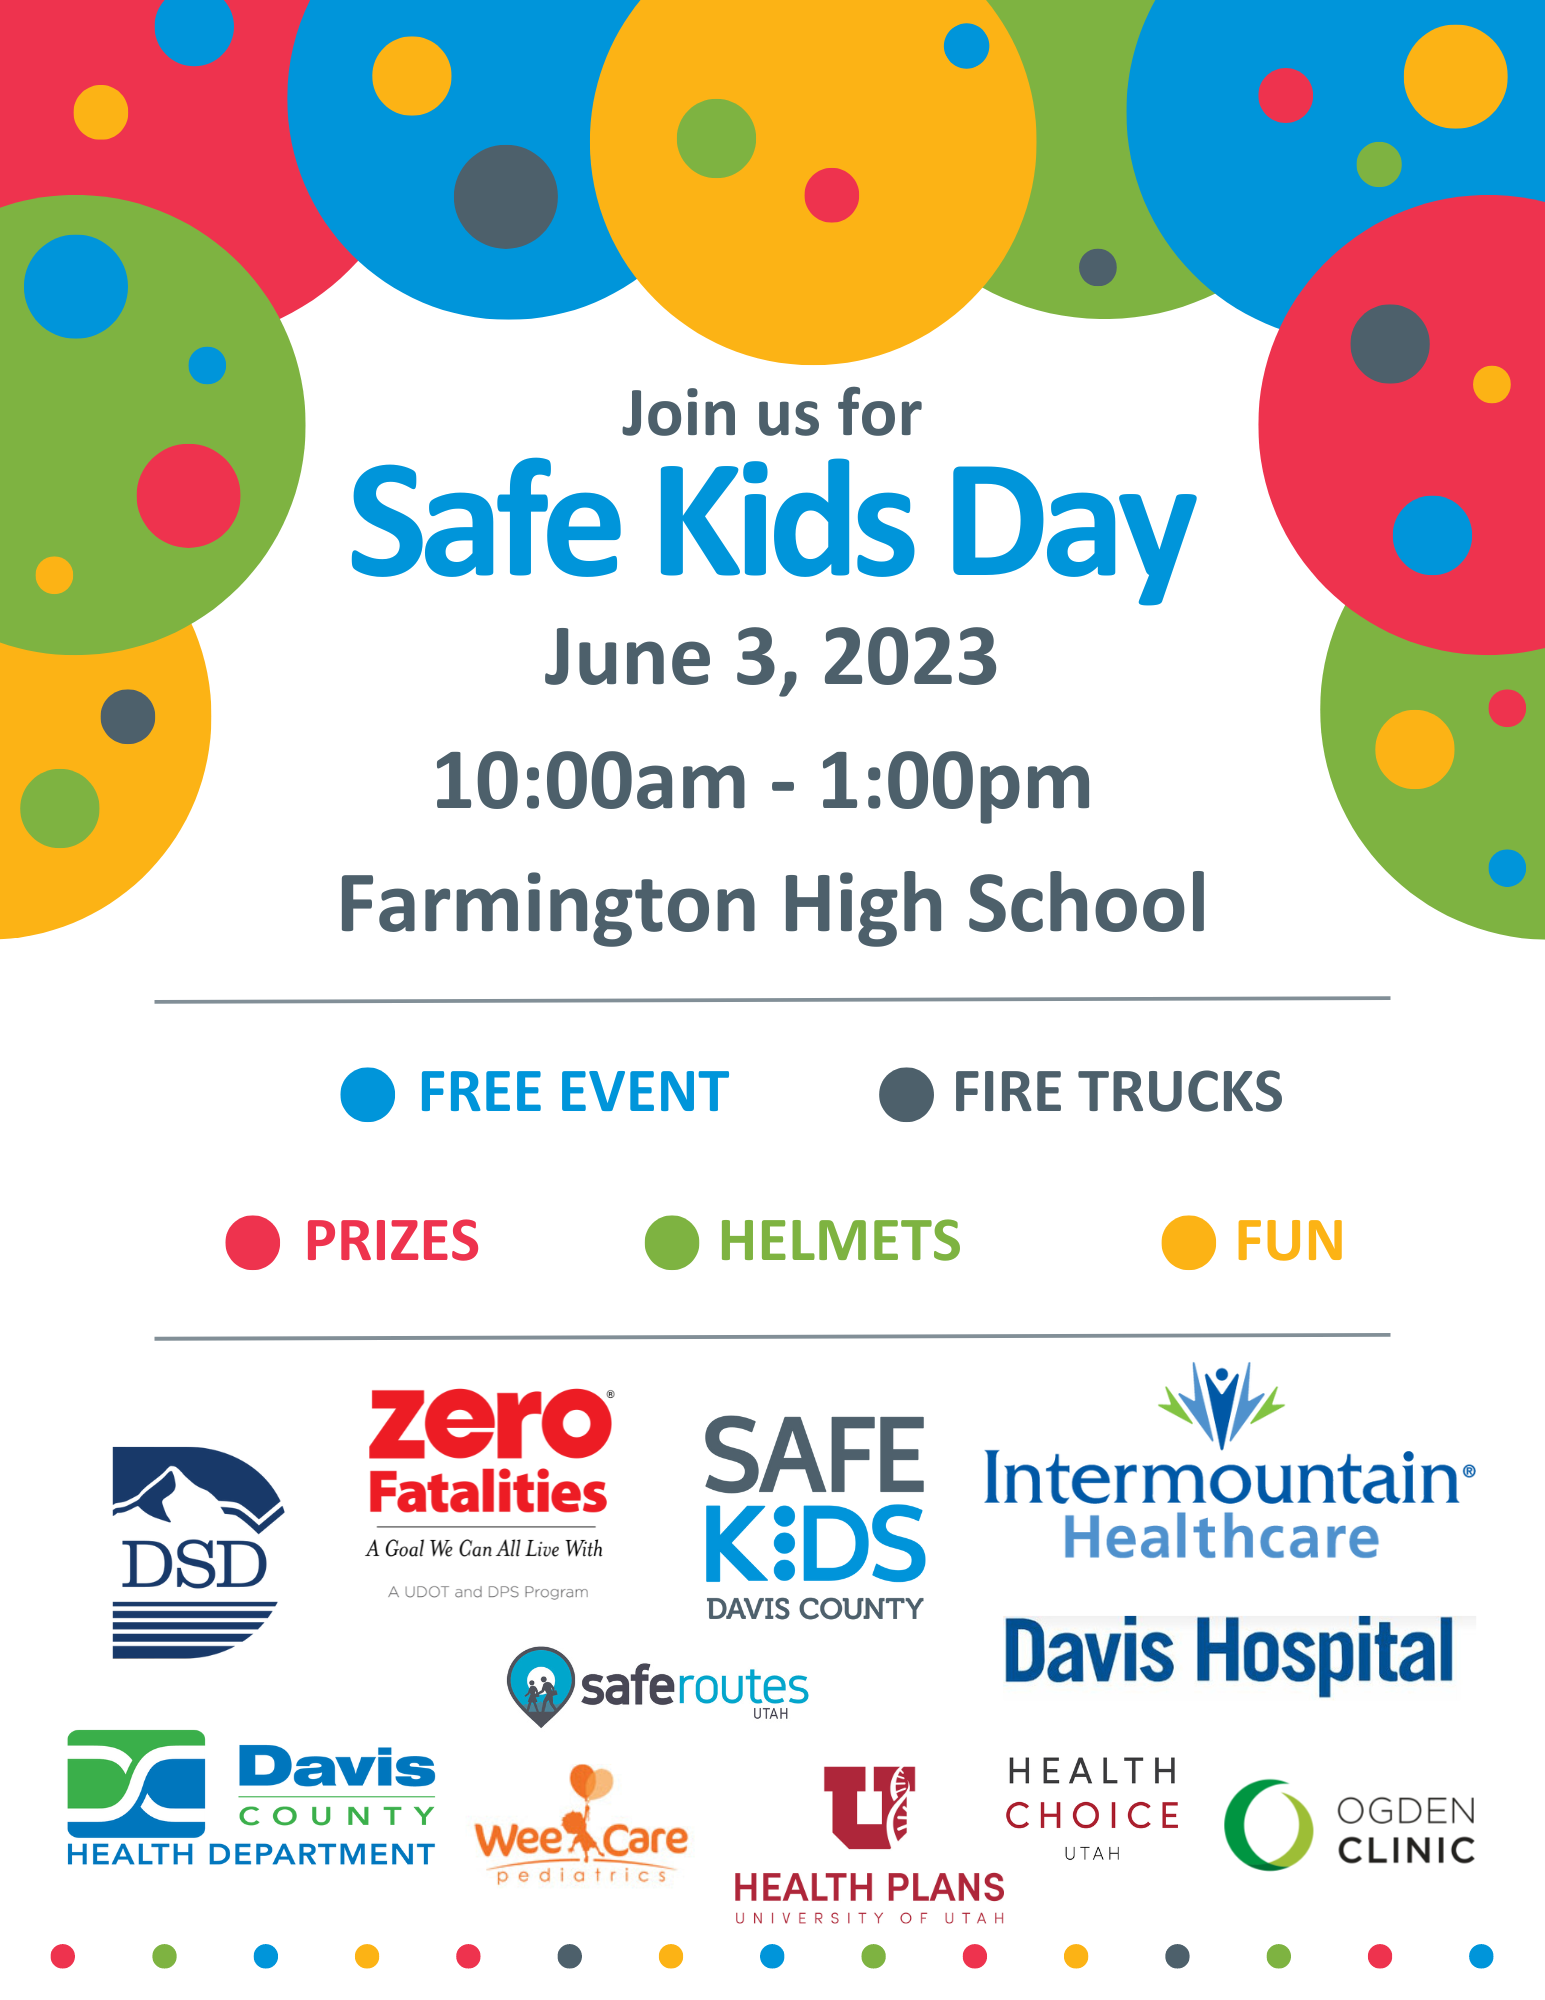 Safe Kids Day on June 3rd, 2023 at Farmington High School